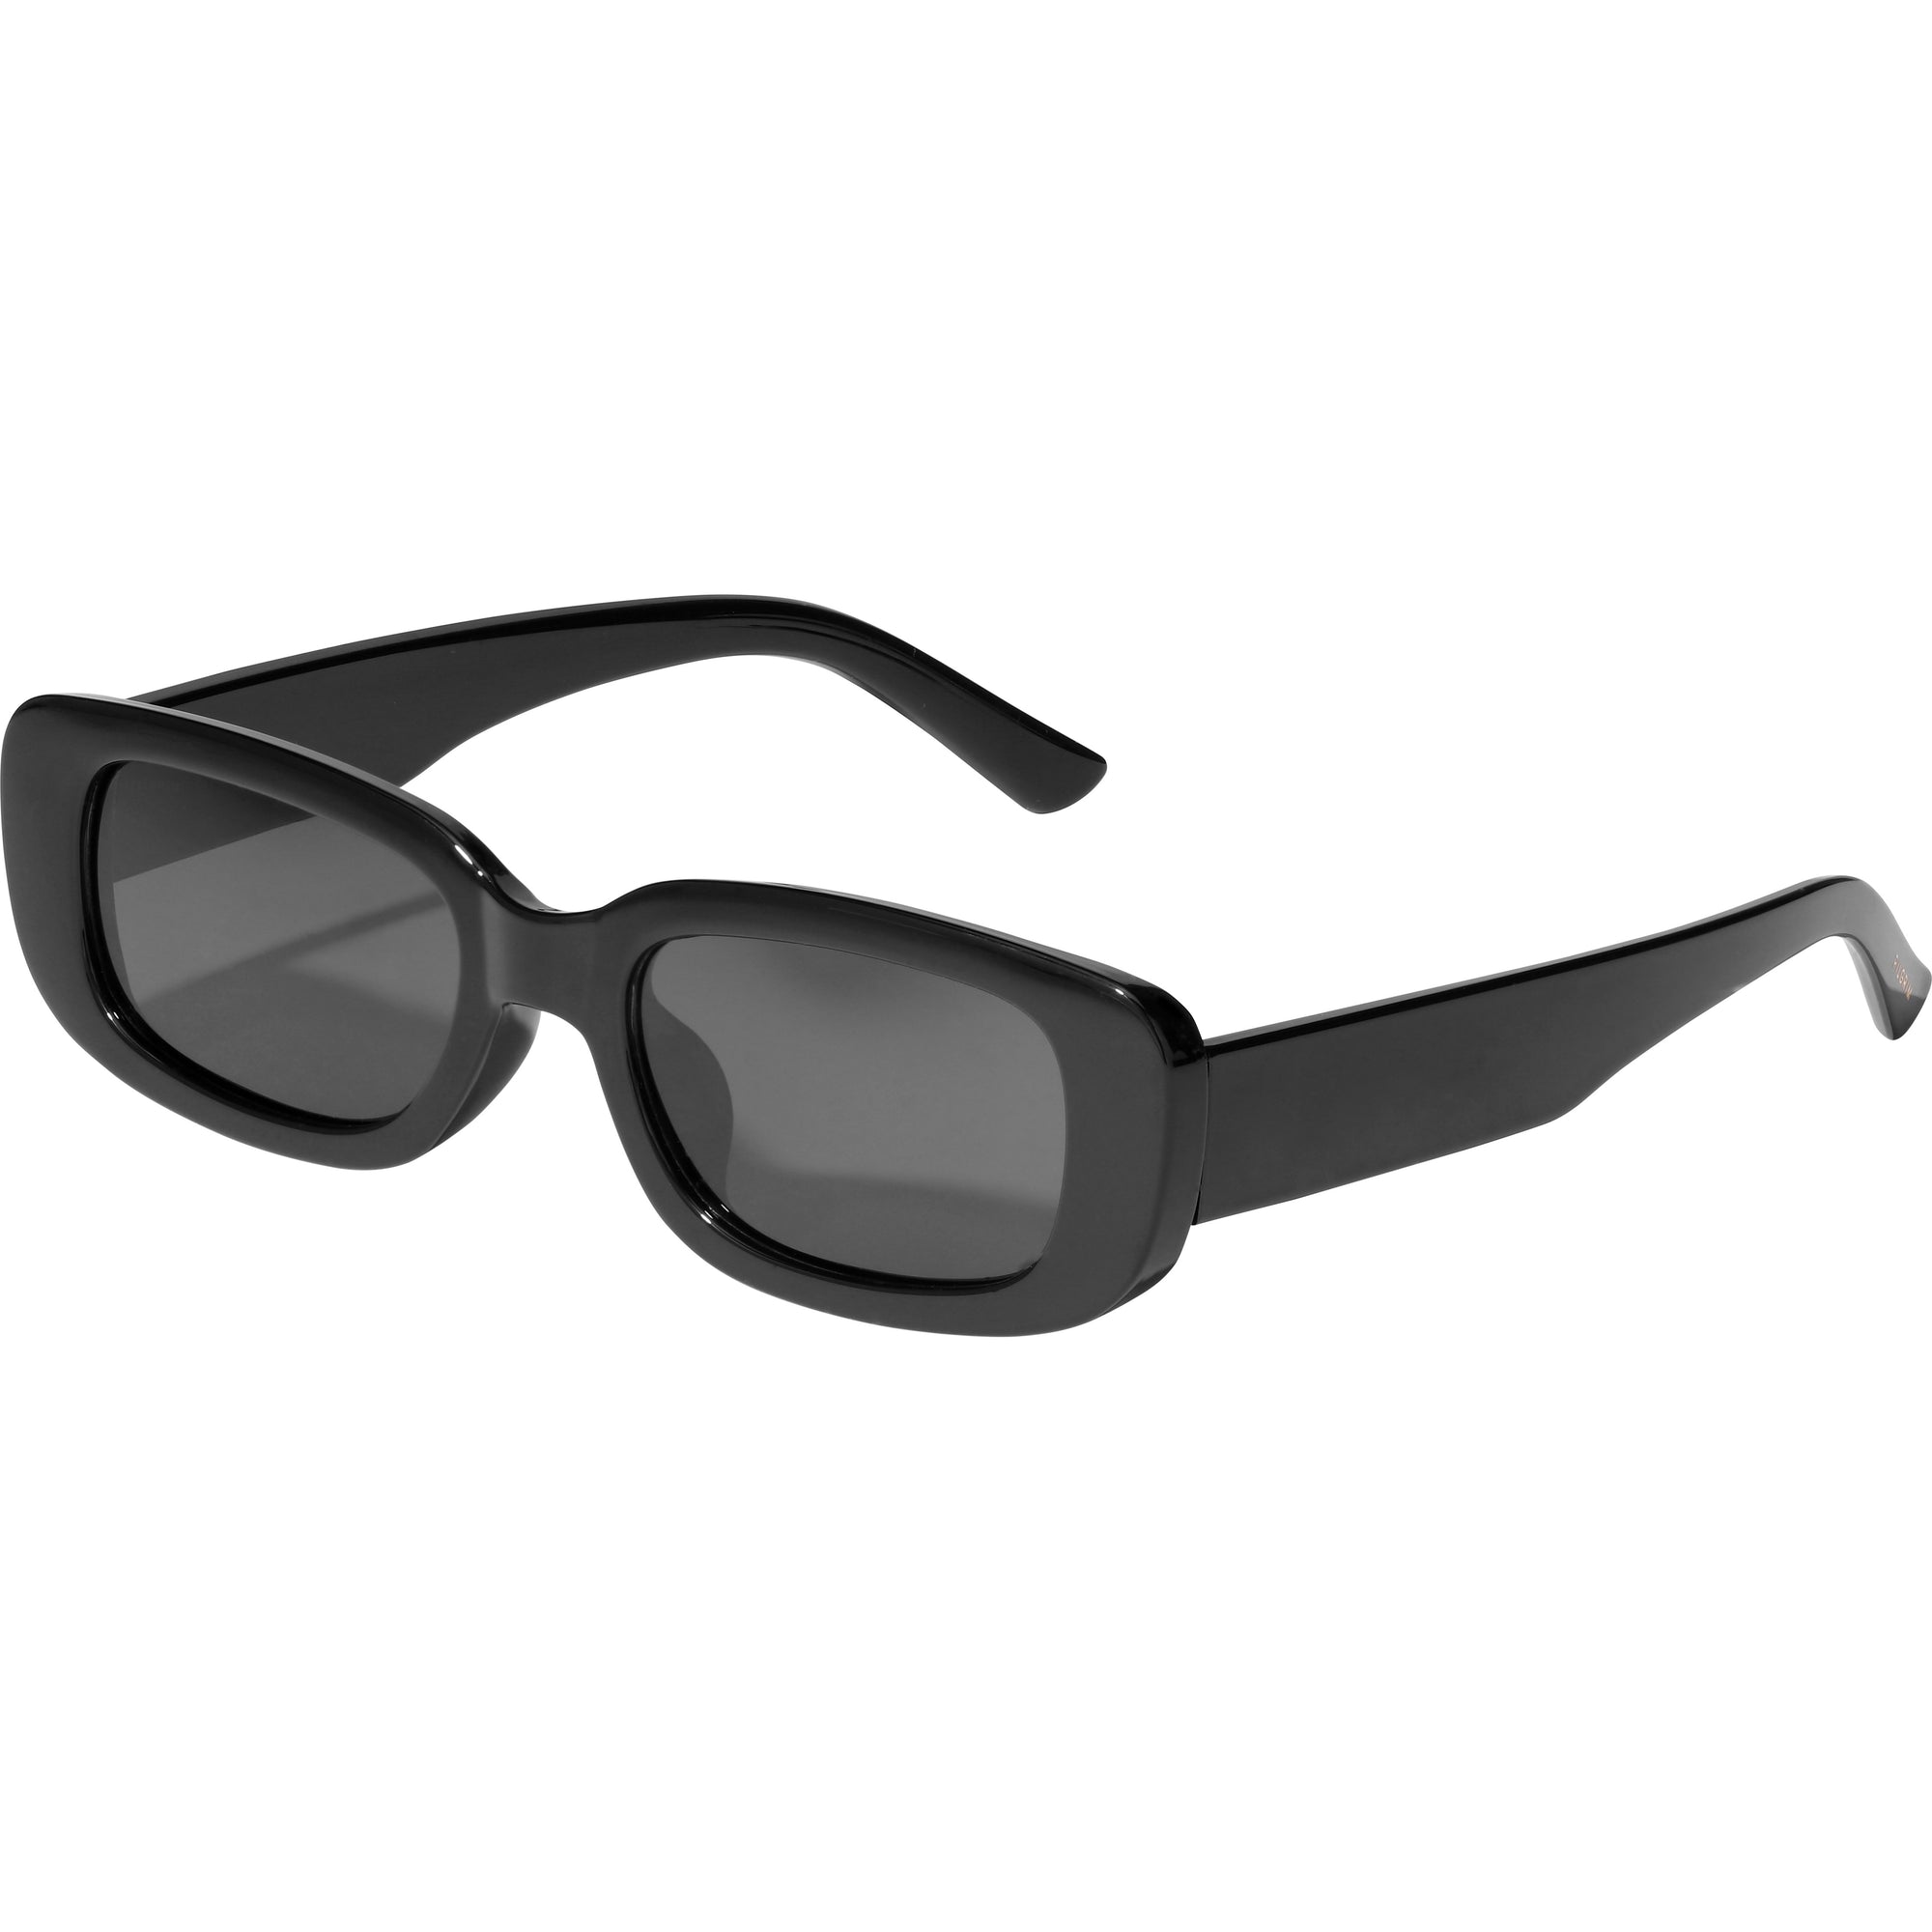 YANSEL recycled sunglasses black